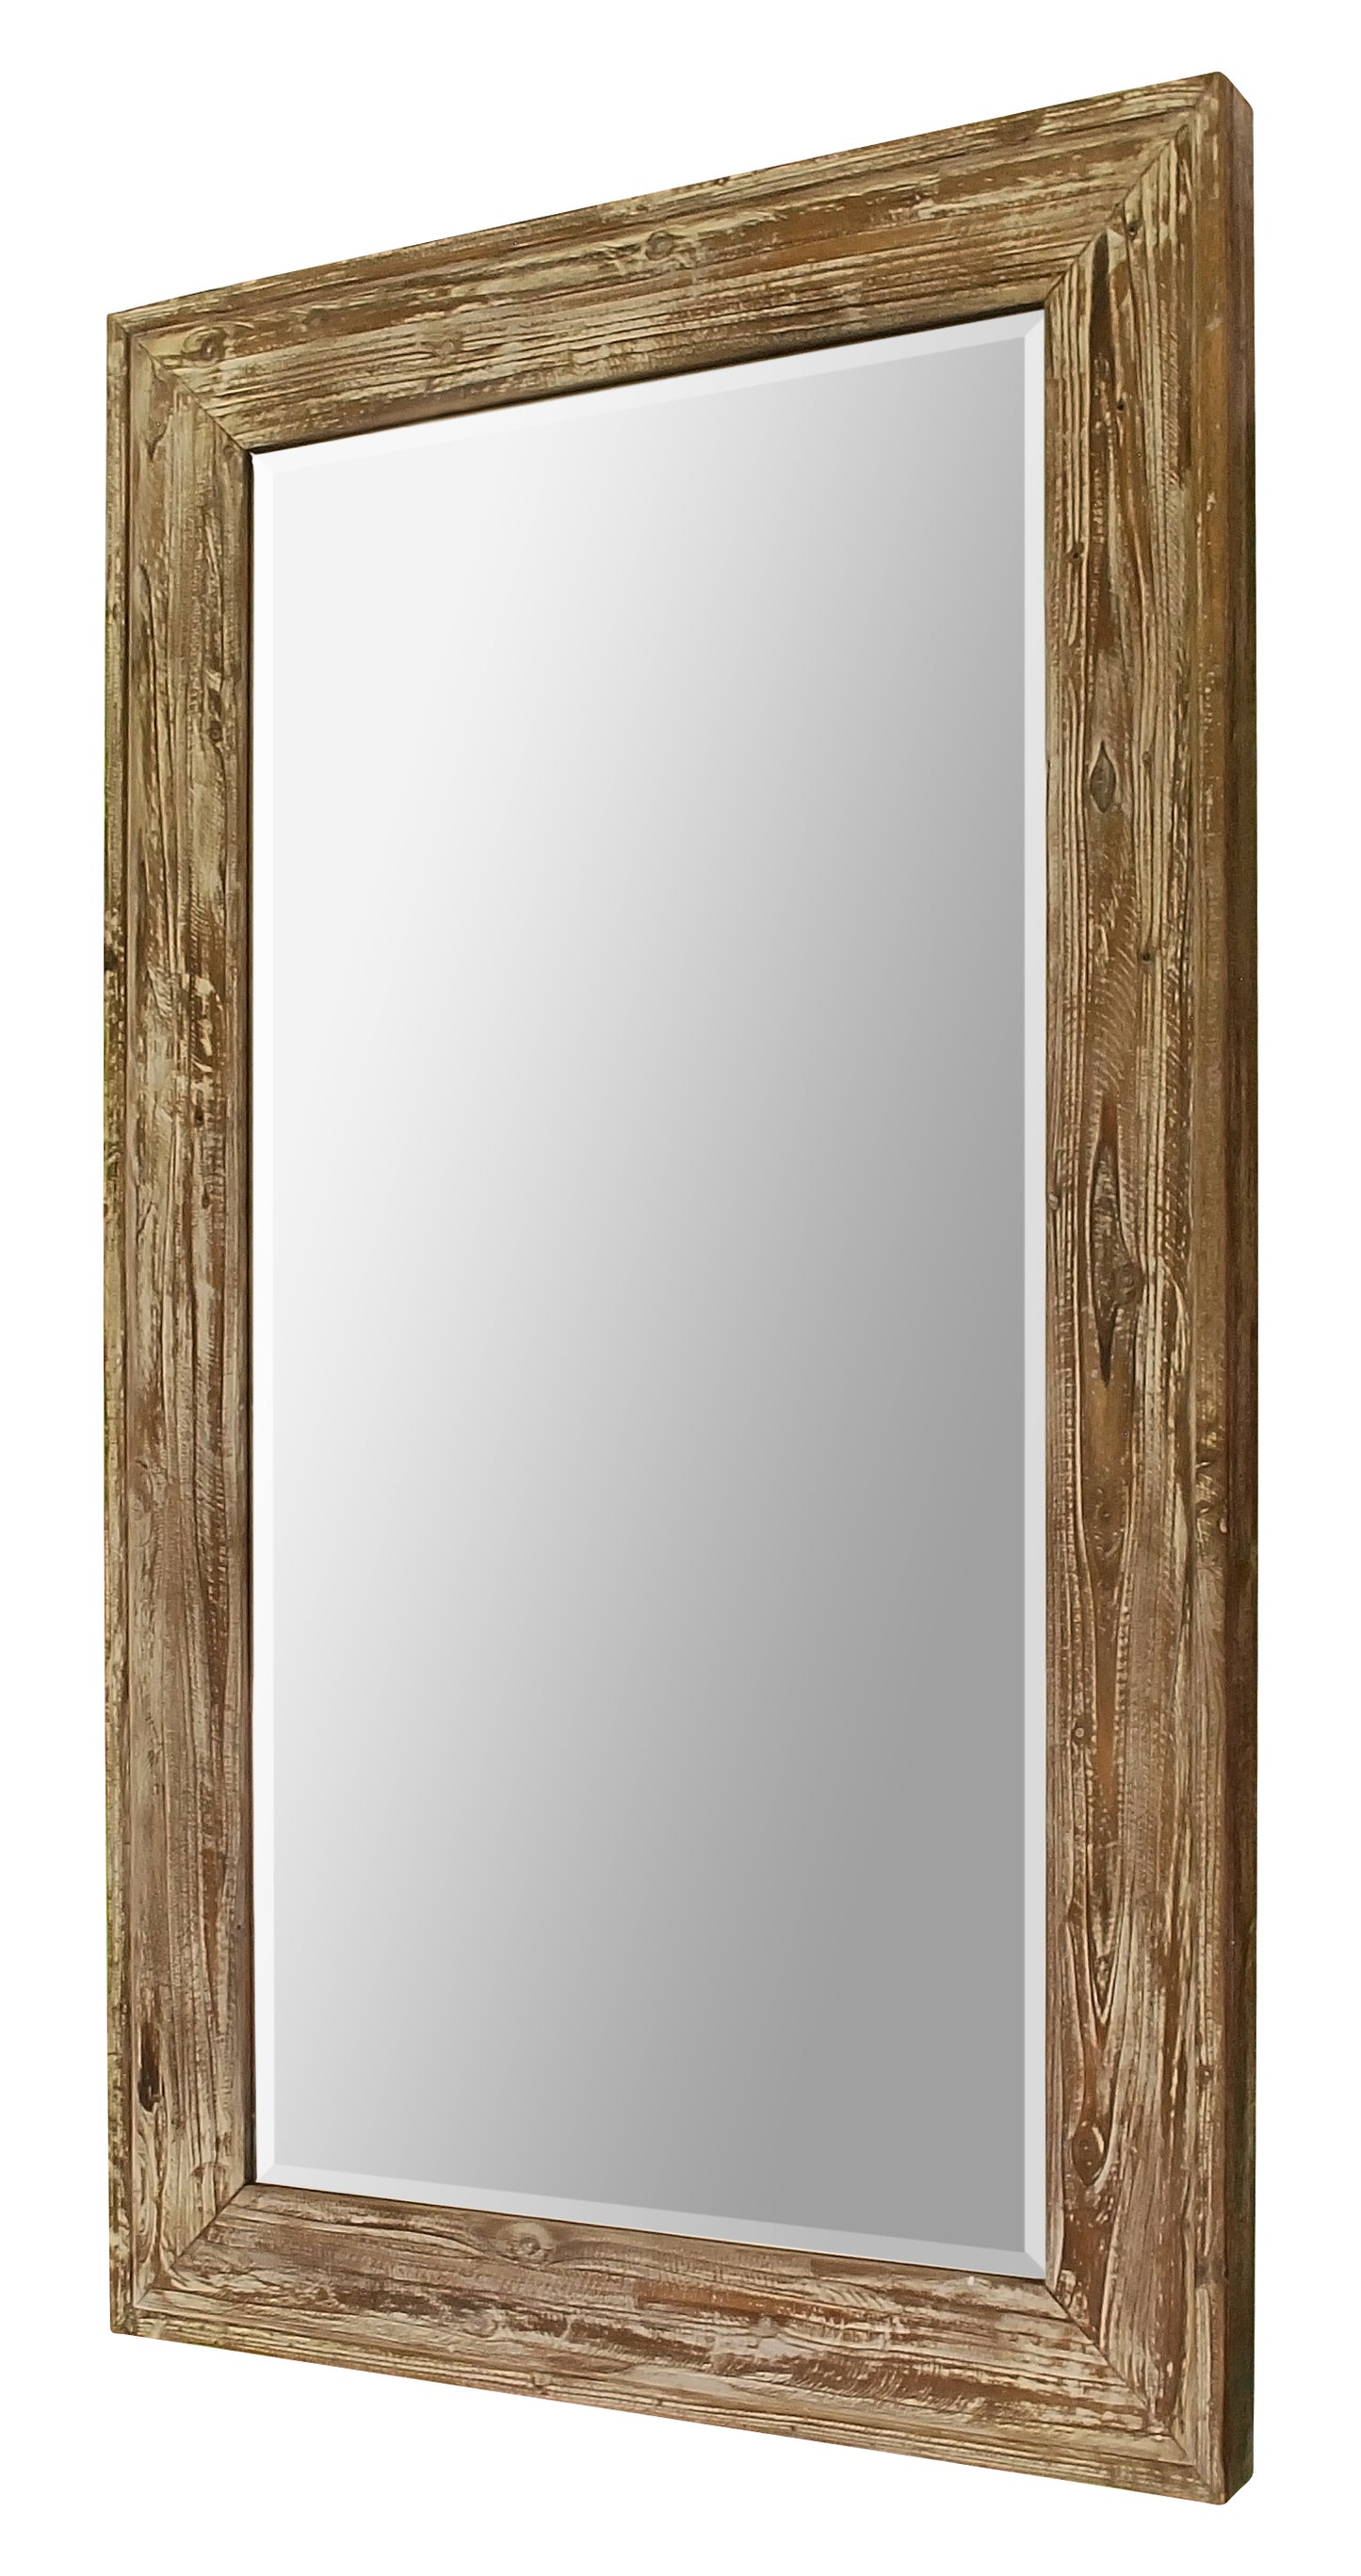 Full length rustic wood framed mirror